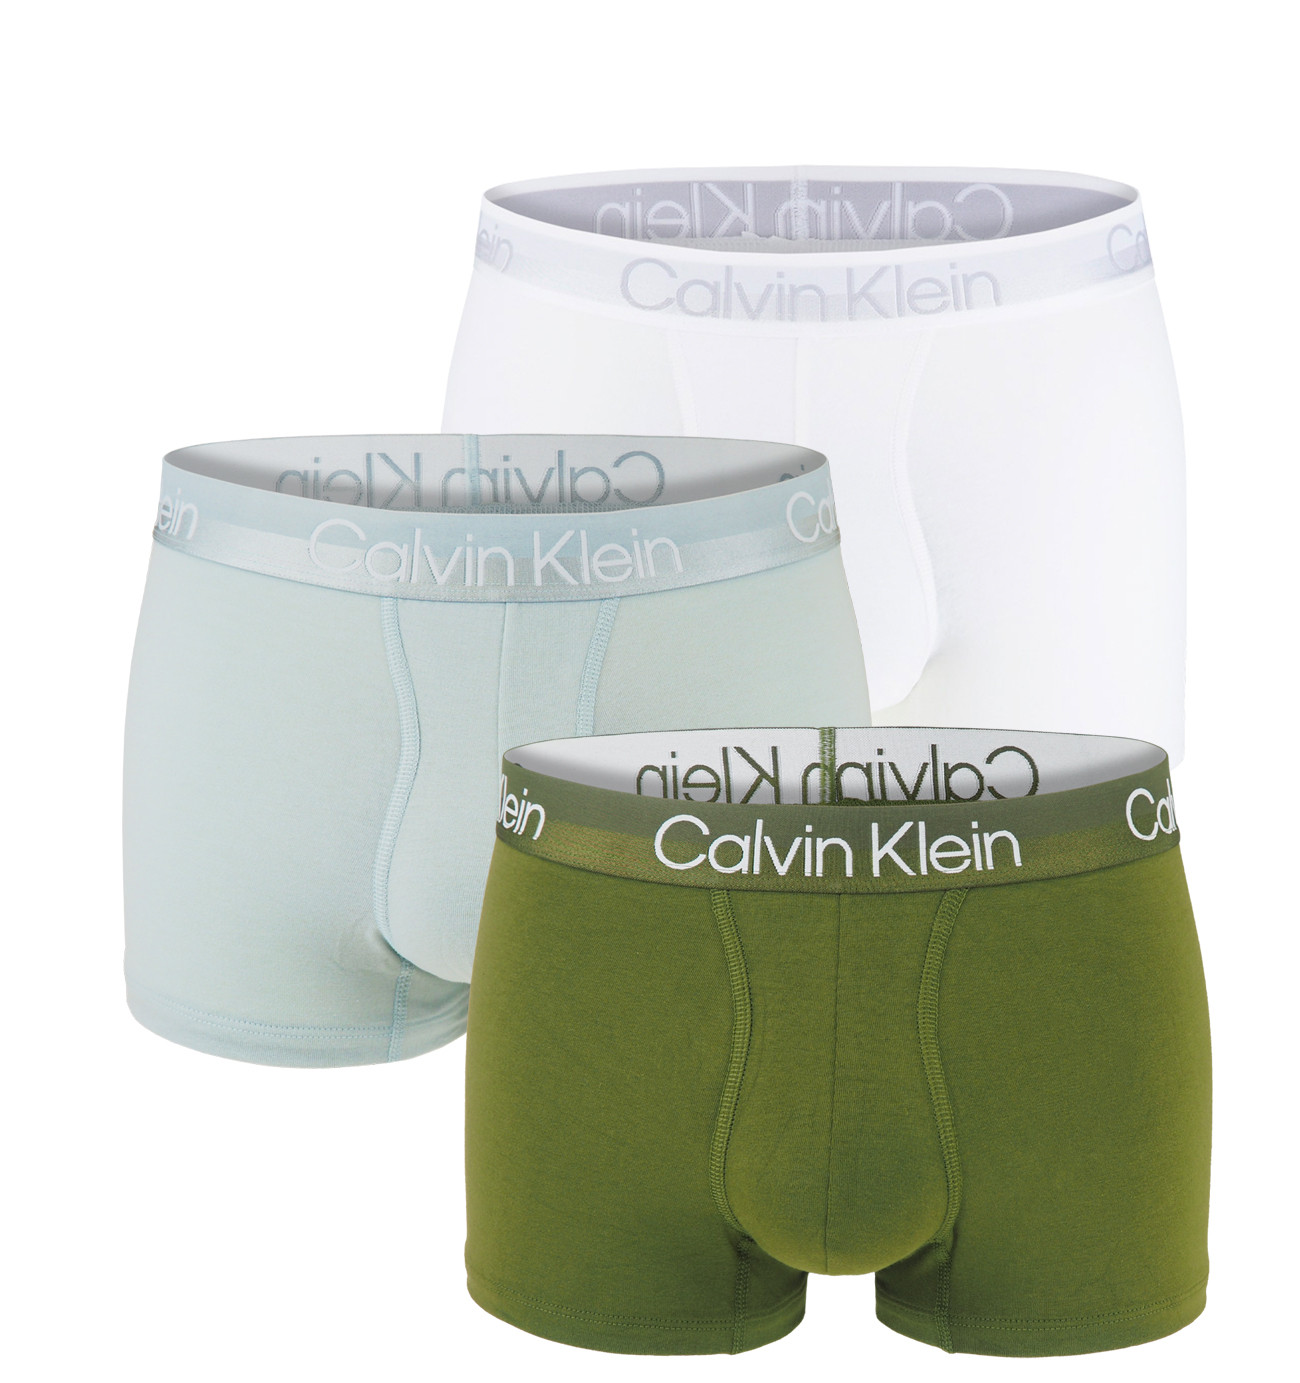 Calvin Klein – boxerky 3PACK modern structure aqua and army green – limitovaná edícia